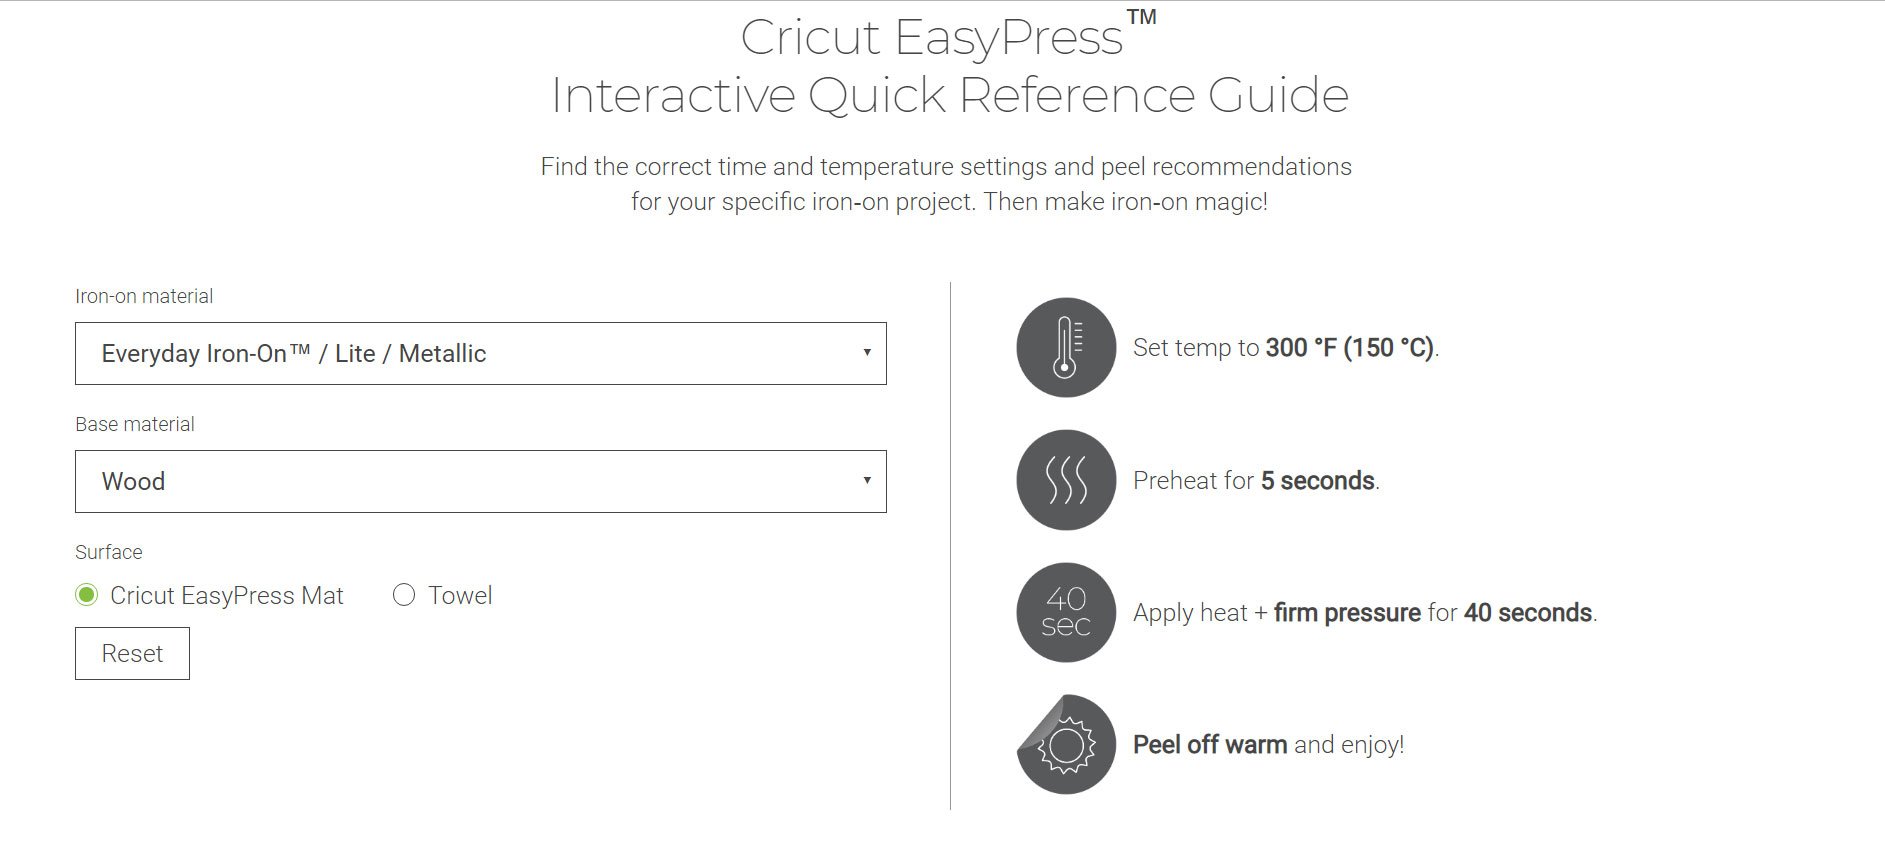 Cricut EasyPress 2 interactive guide with drop-down menu